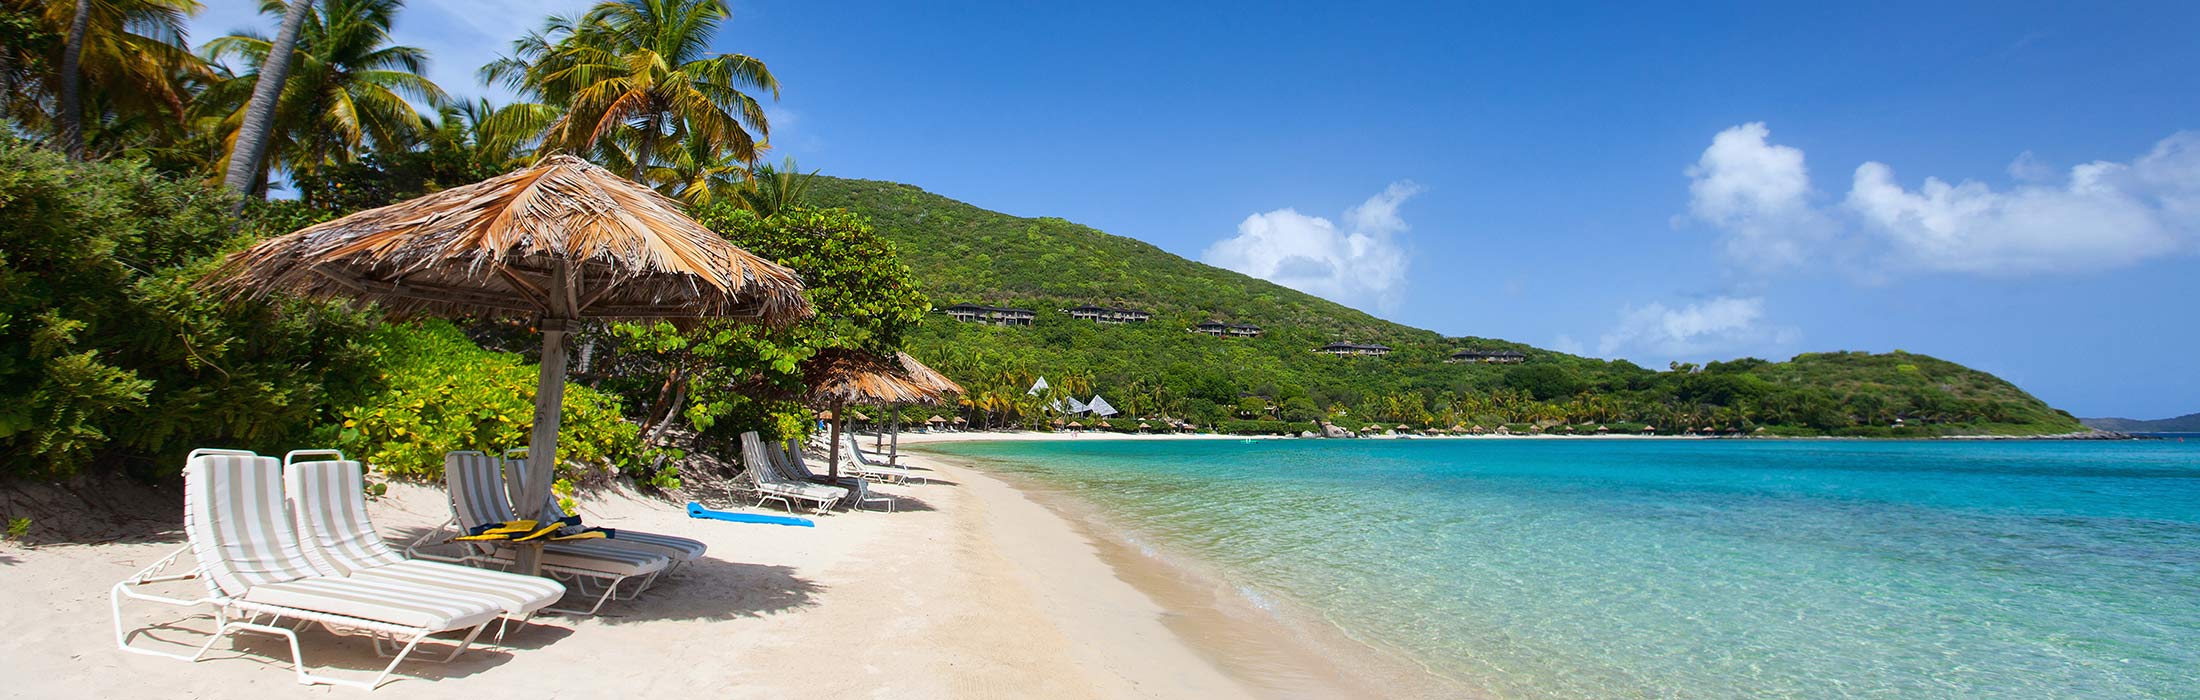 top yacht charter destinations carribean bahamas carribean windward islands main slider 2